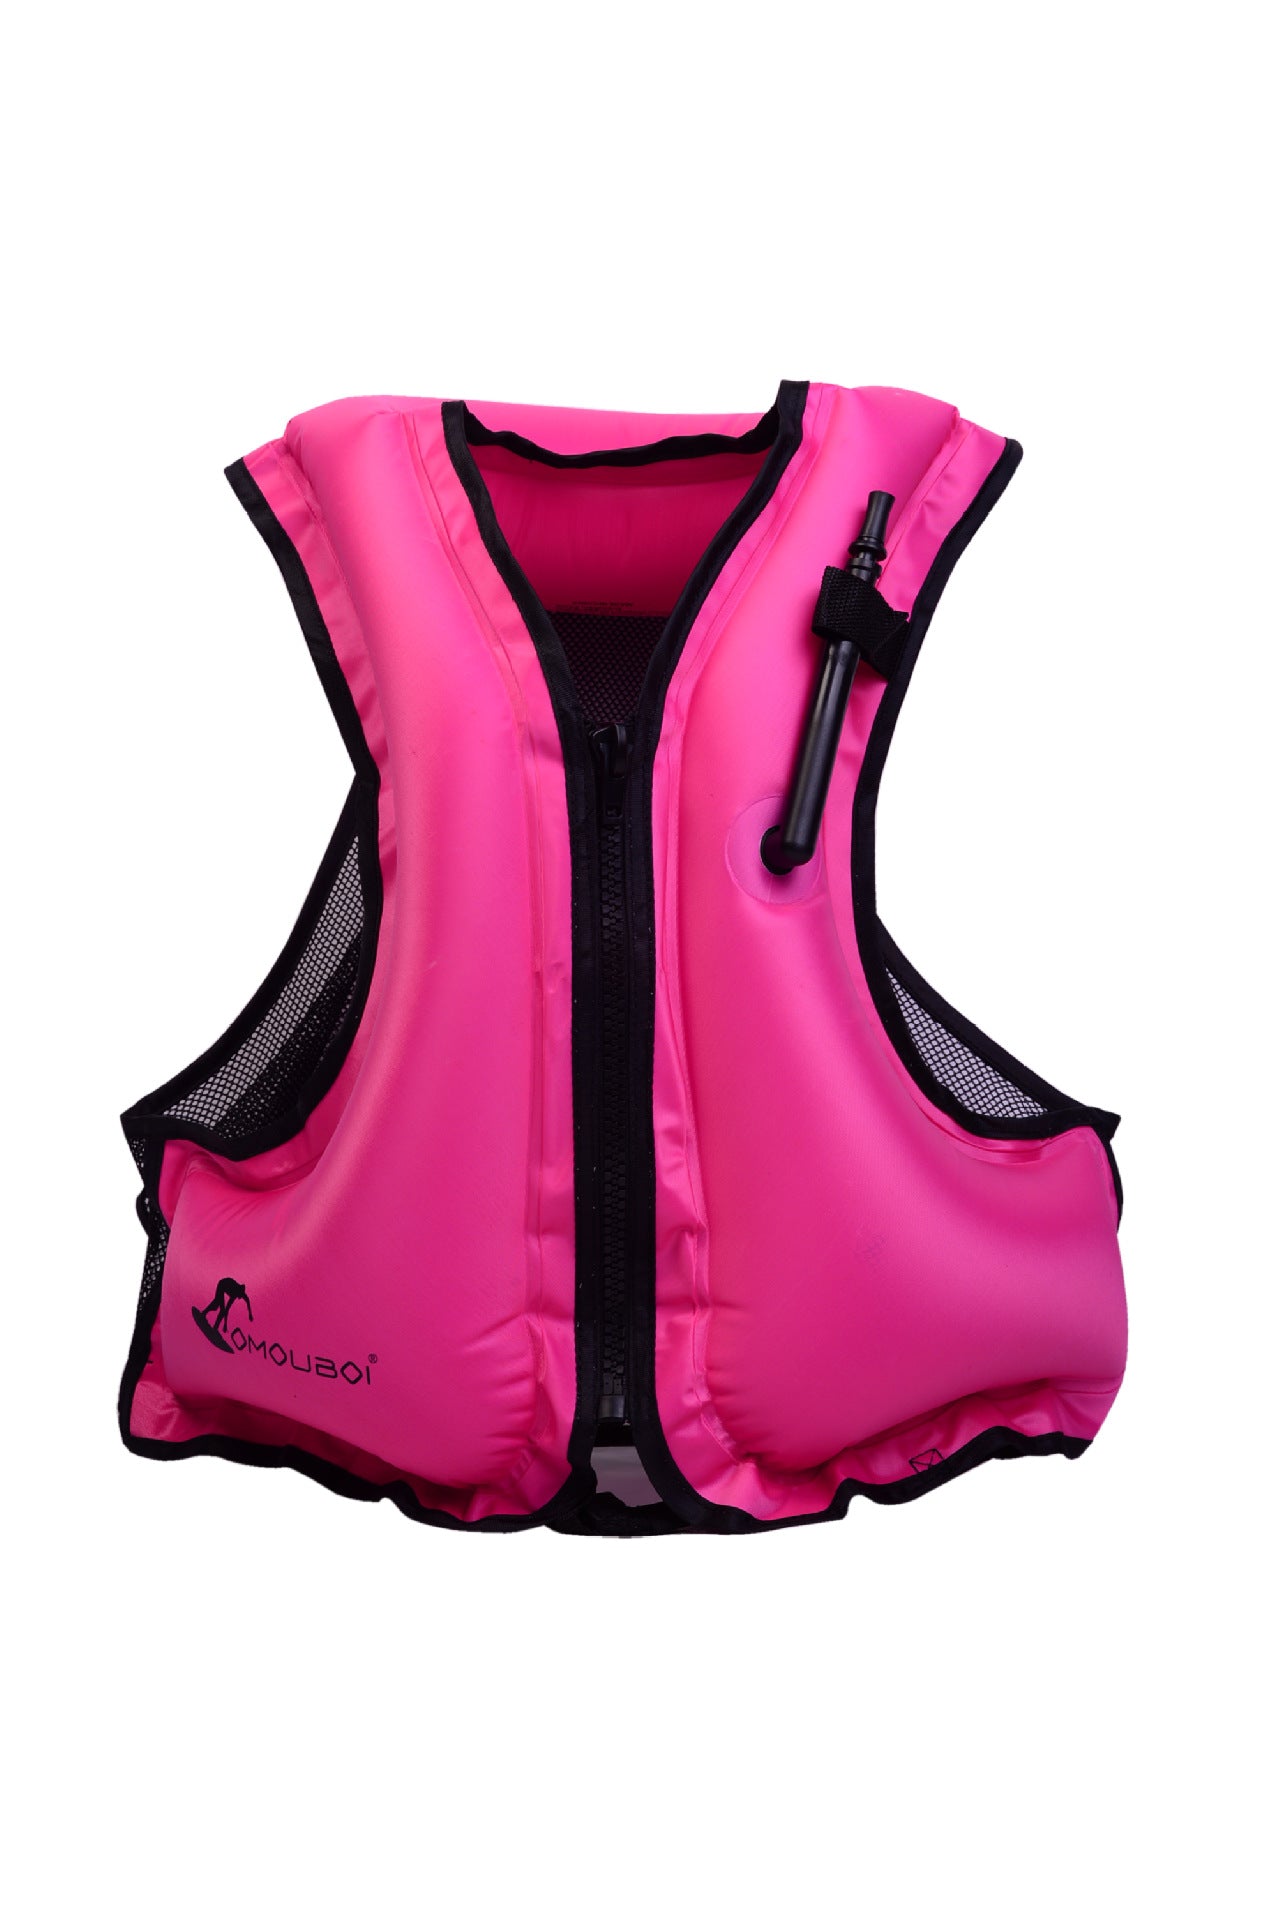 Spot Inflatable Life Jackets, Children's Snorkeling Buoyancy Vest, Adult Free Size Buoyancy Boat Fishing Life Jackets